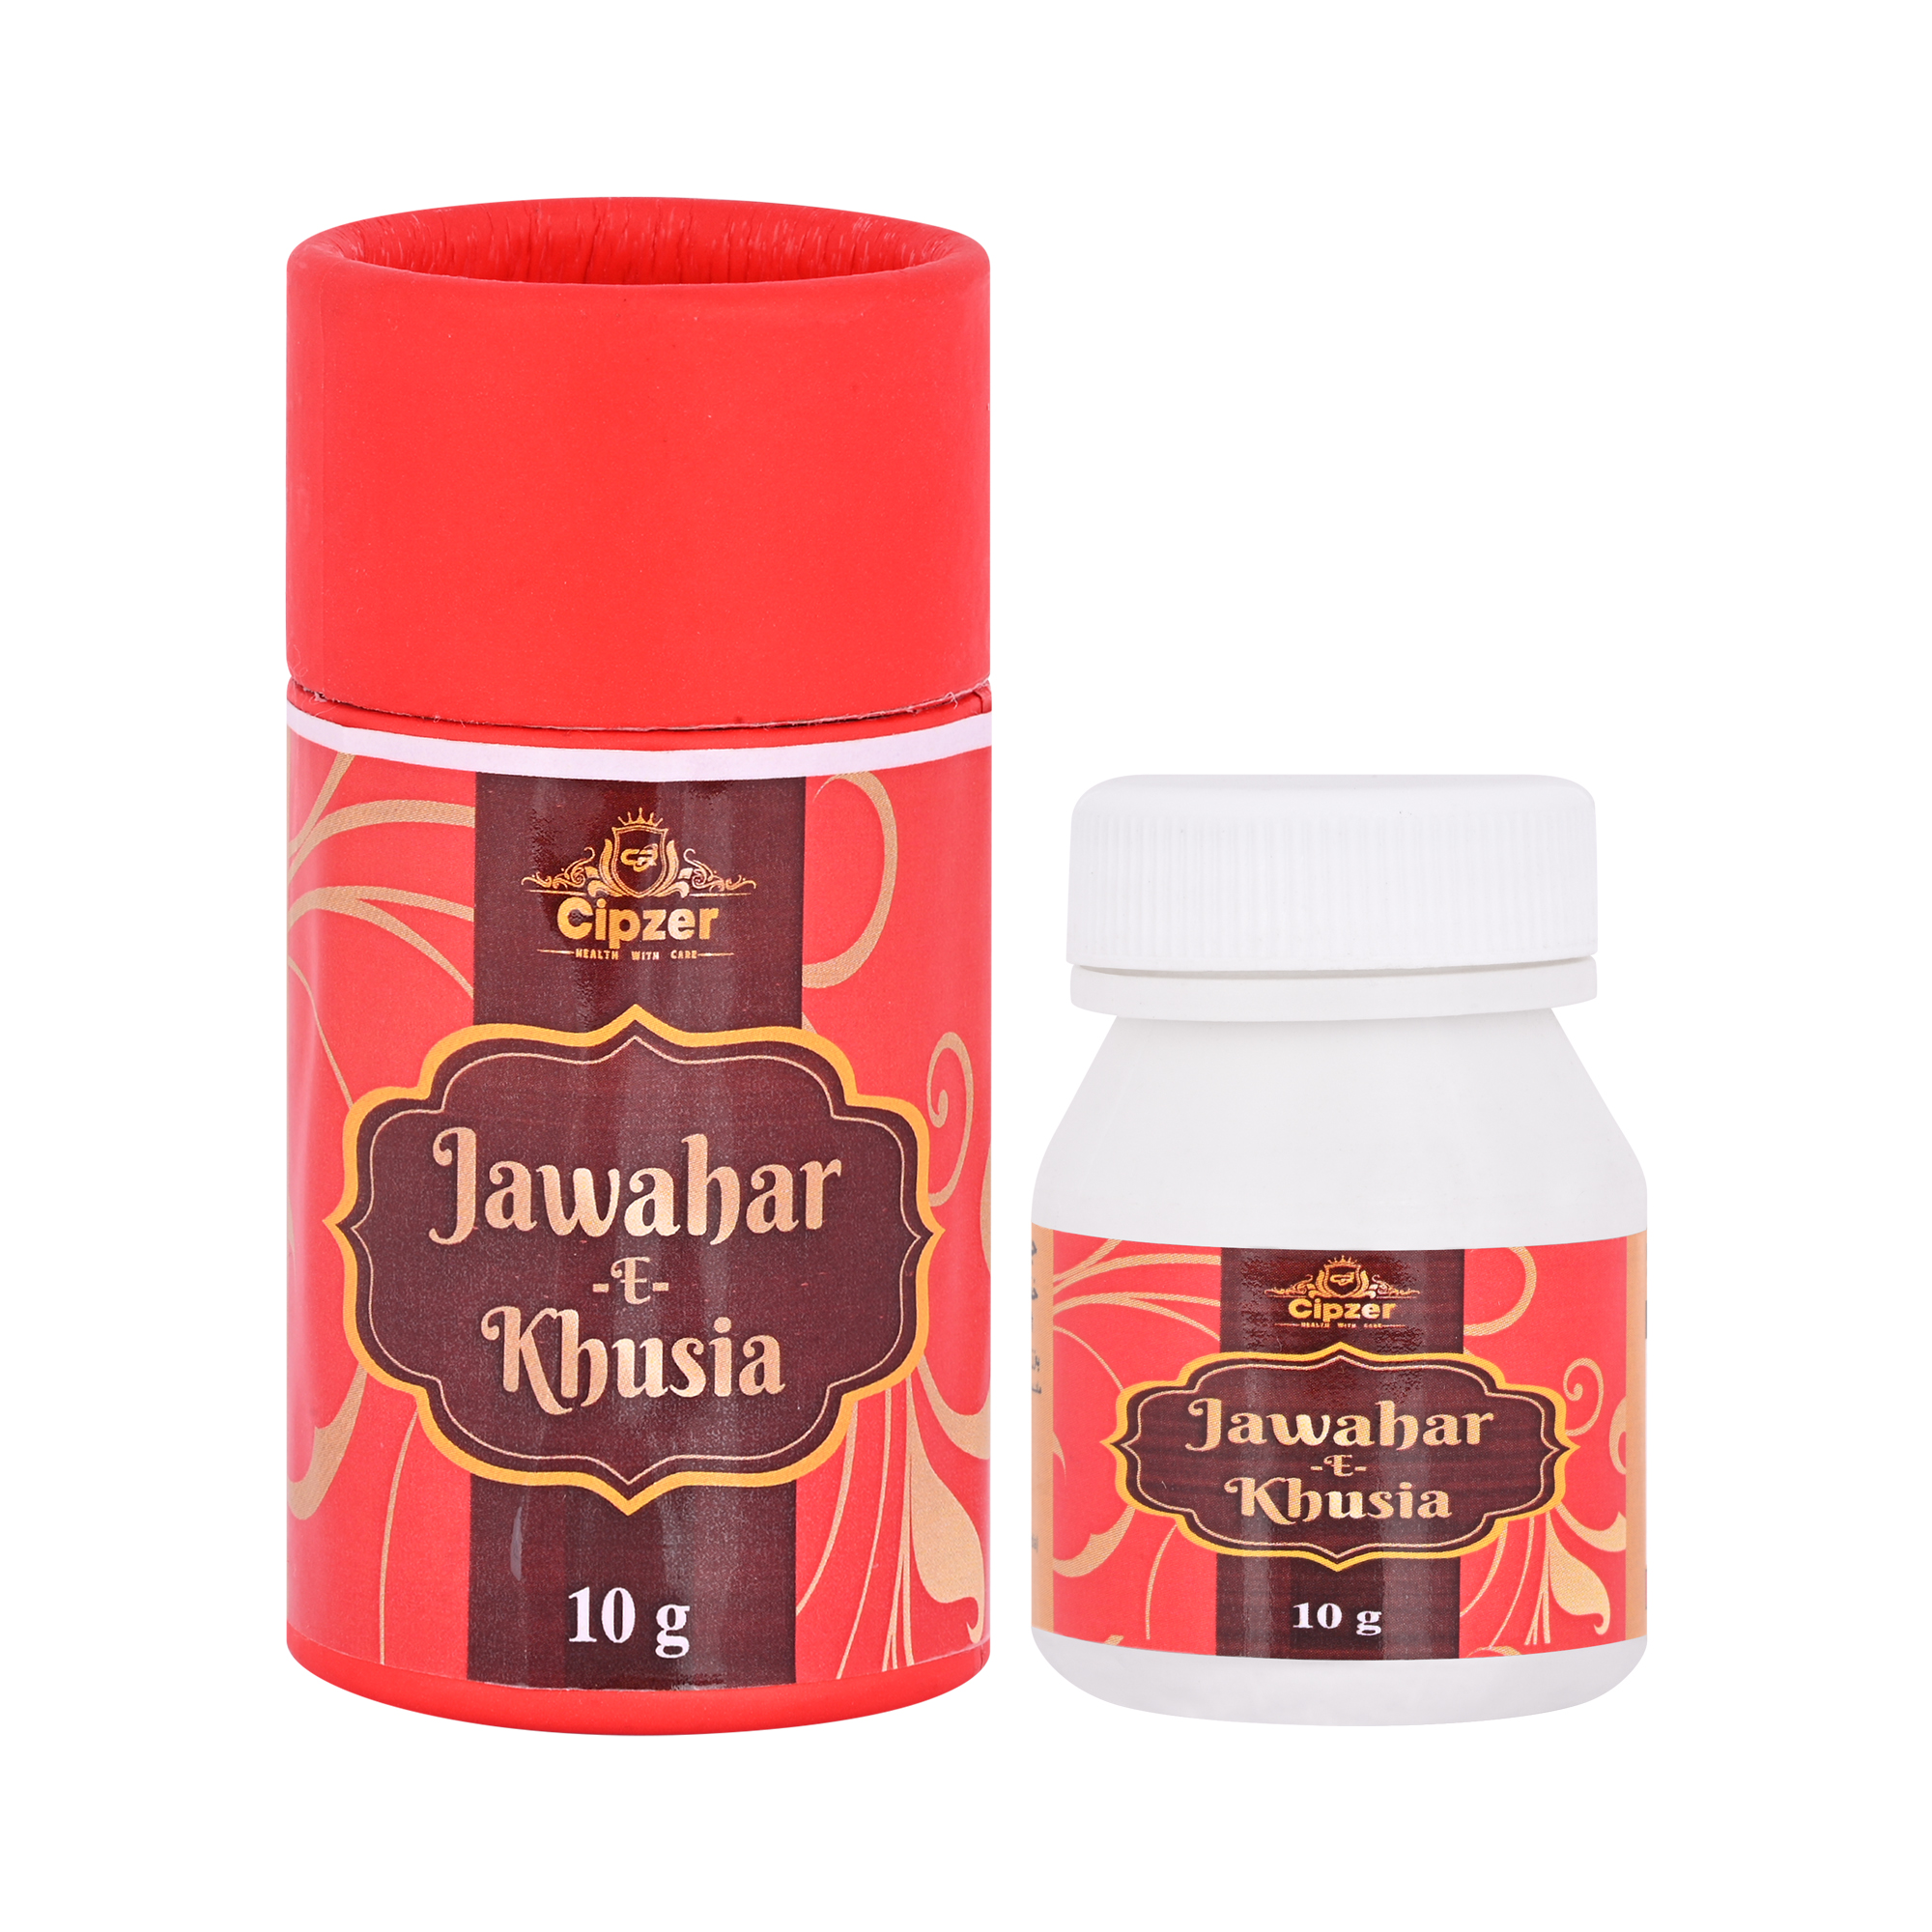 Buy Cipzer Jawahar-e-khusia at Best Price Online